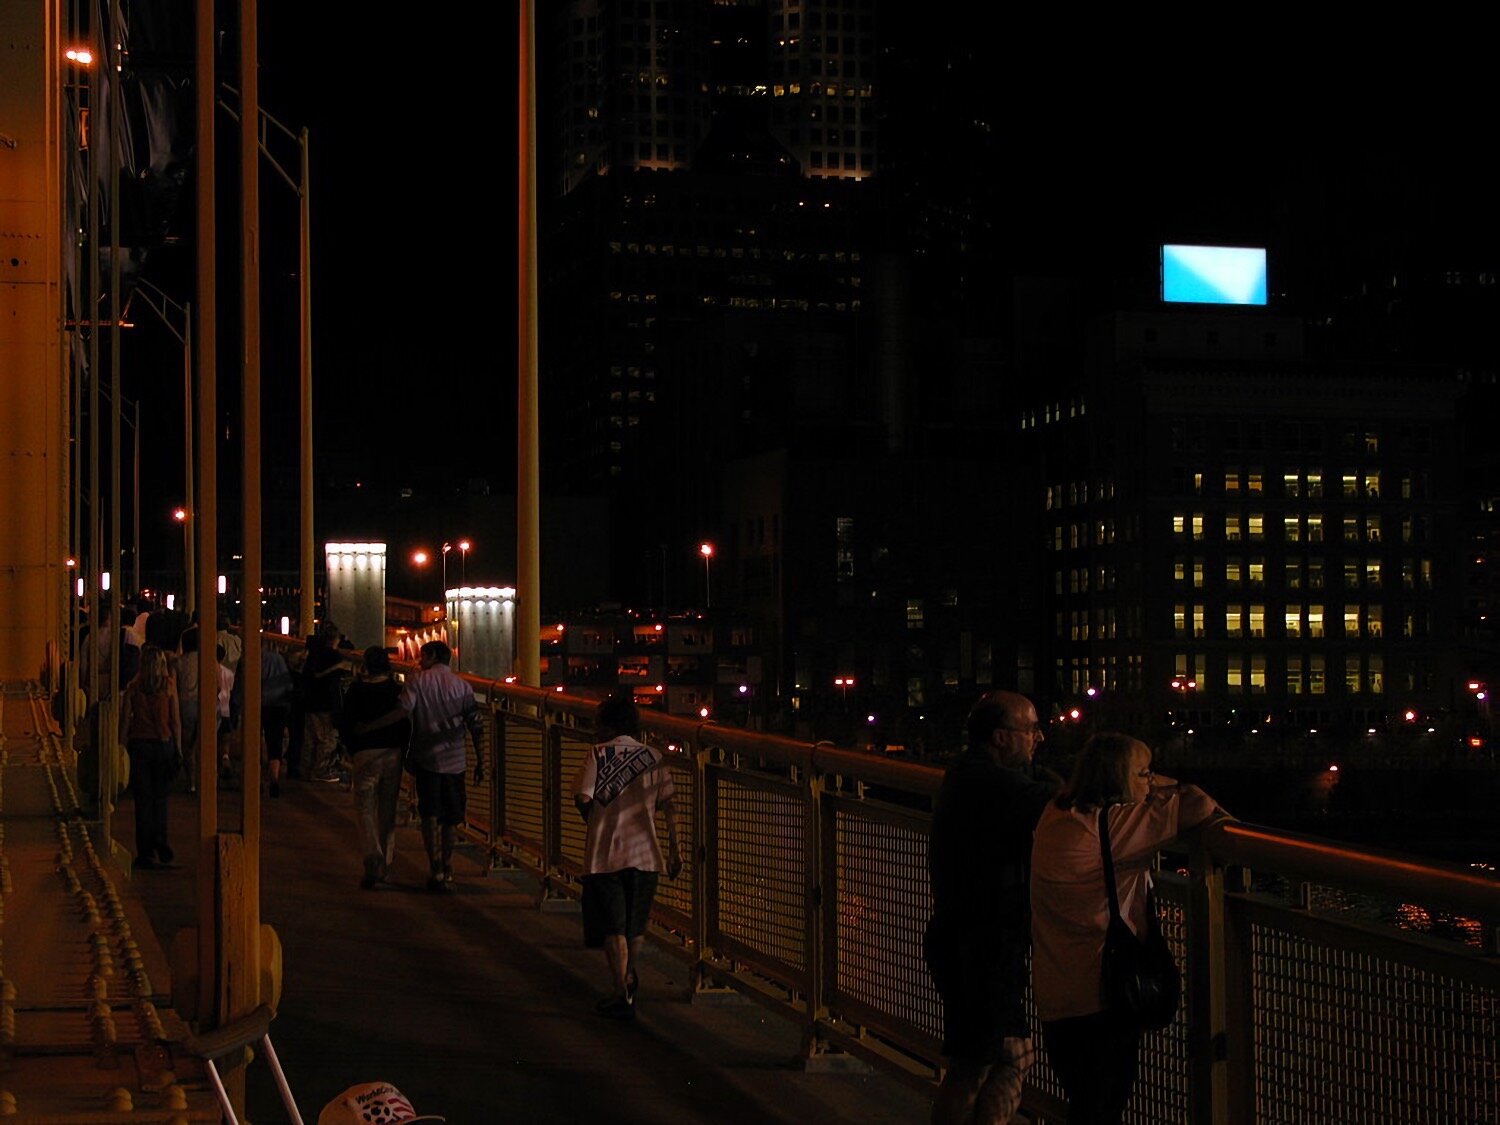  Billboard
the Skyline, Pittsburgh, 2001
© photo by AJ Weissbard 